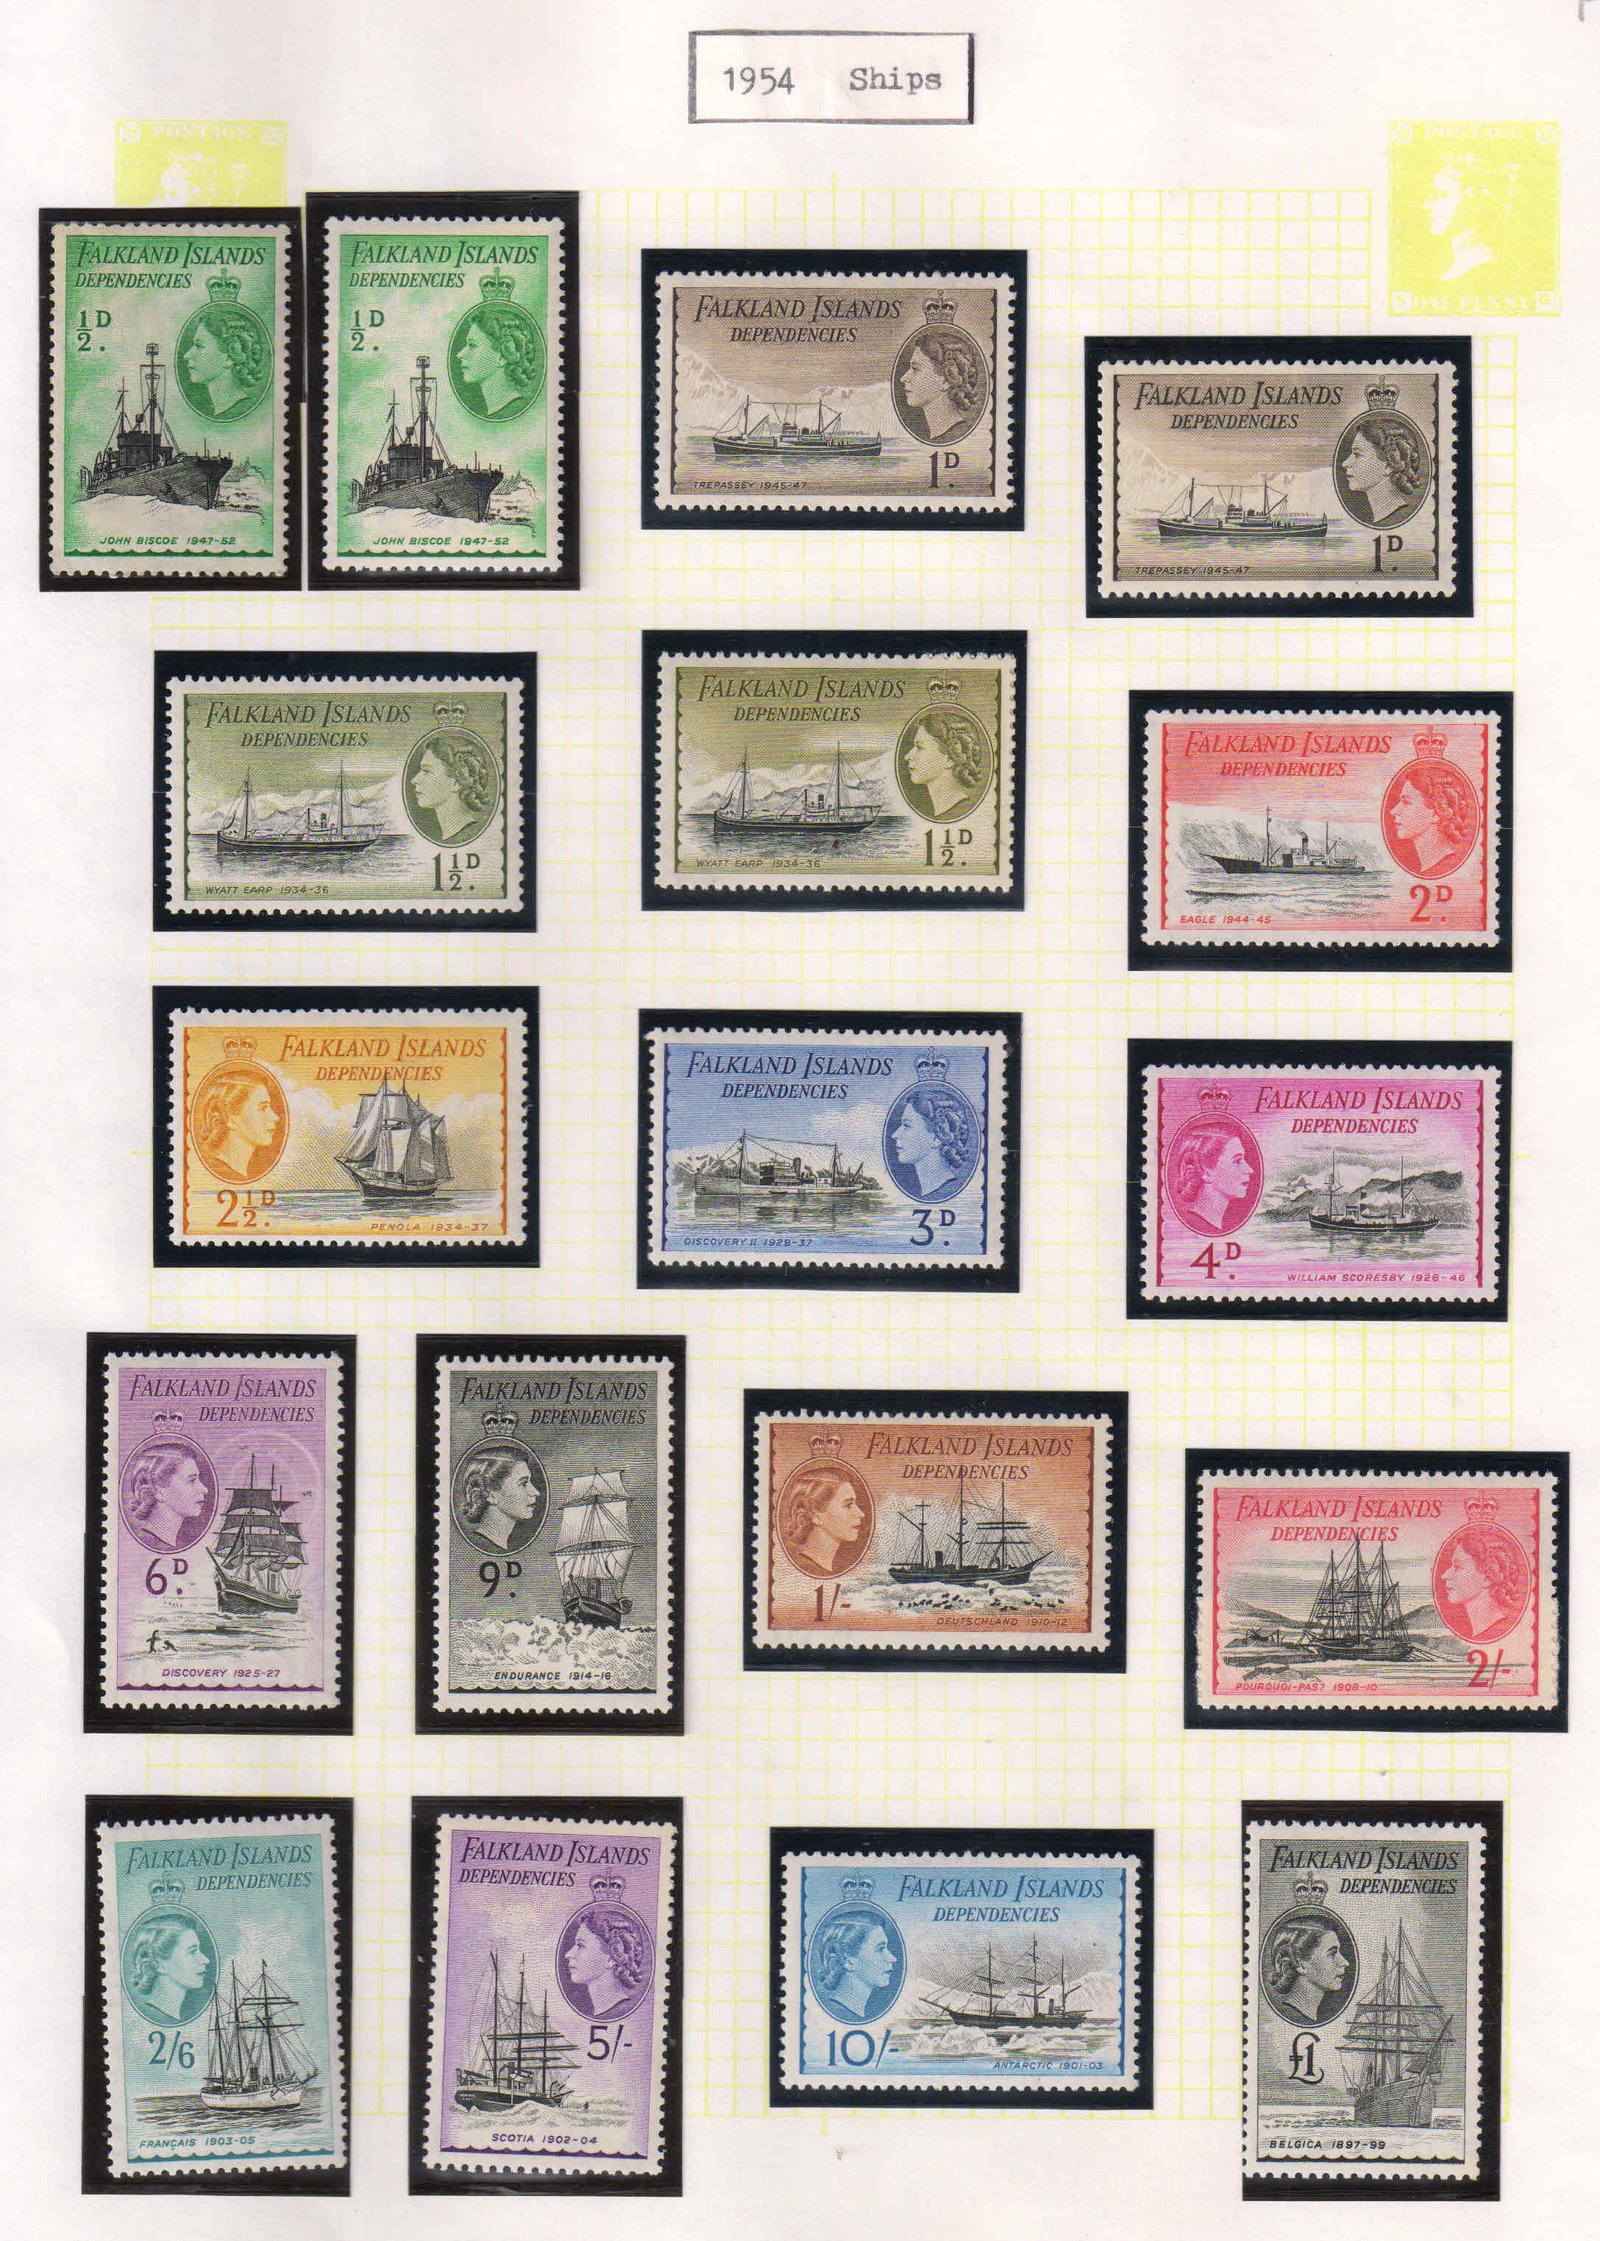 FALKLAND ISLANDS Dependencies 1954-Queen Elizabeth Pictorial Series, Ships, Set of 18 As per Scan, MNH, S.G. G 26-G 40-Cat � 275-